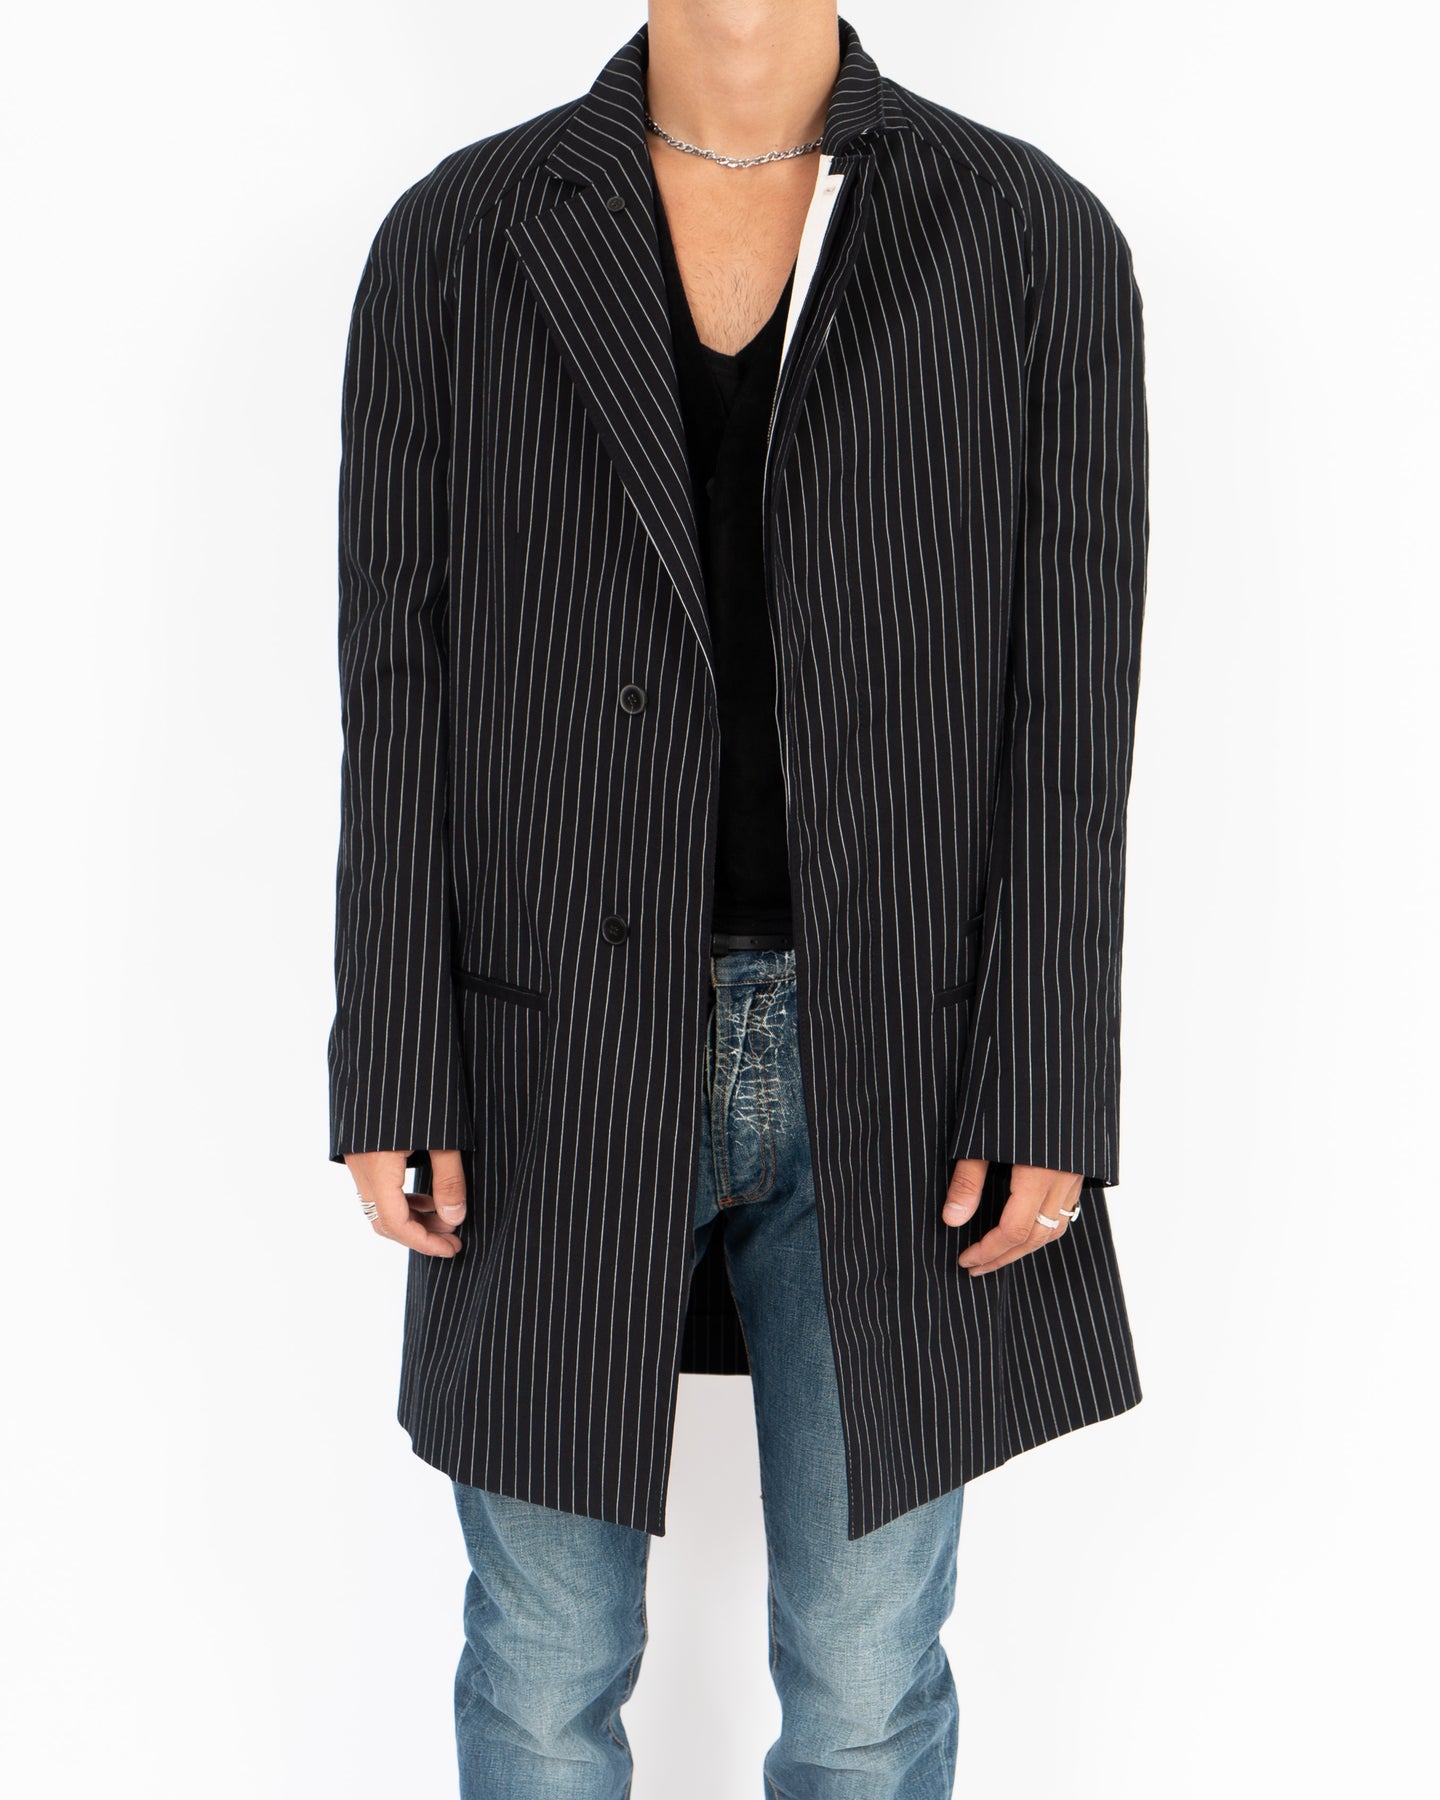 SS18 Black & White Striped Raglan Coat Sample